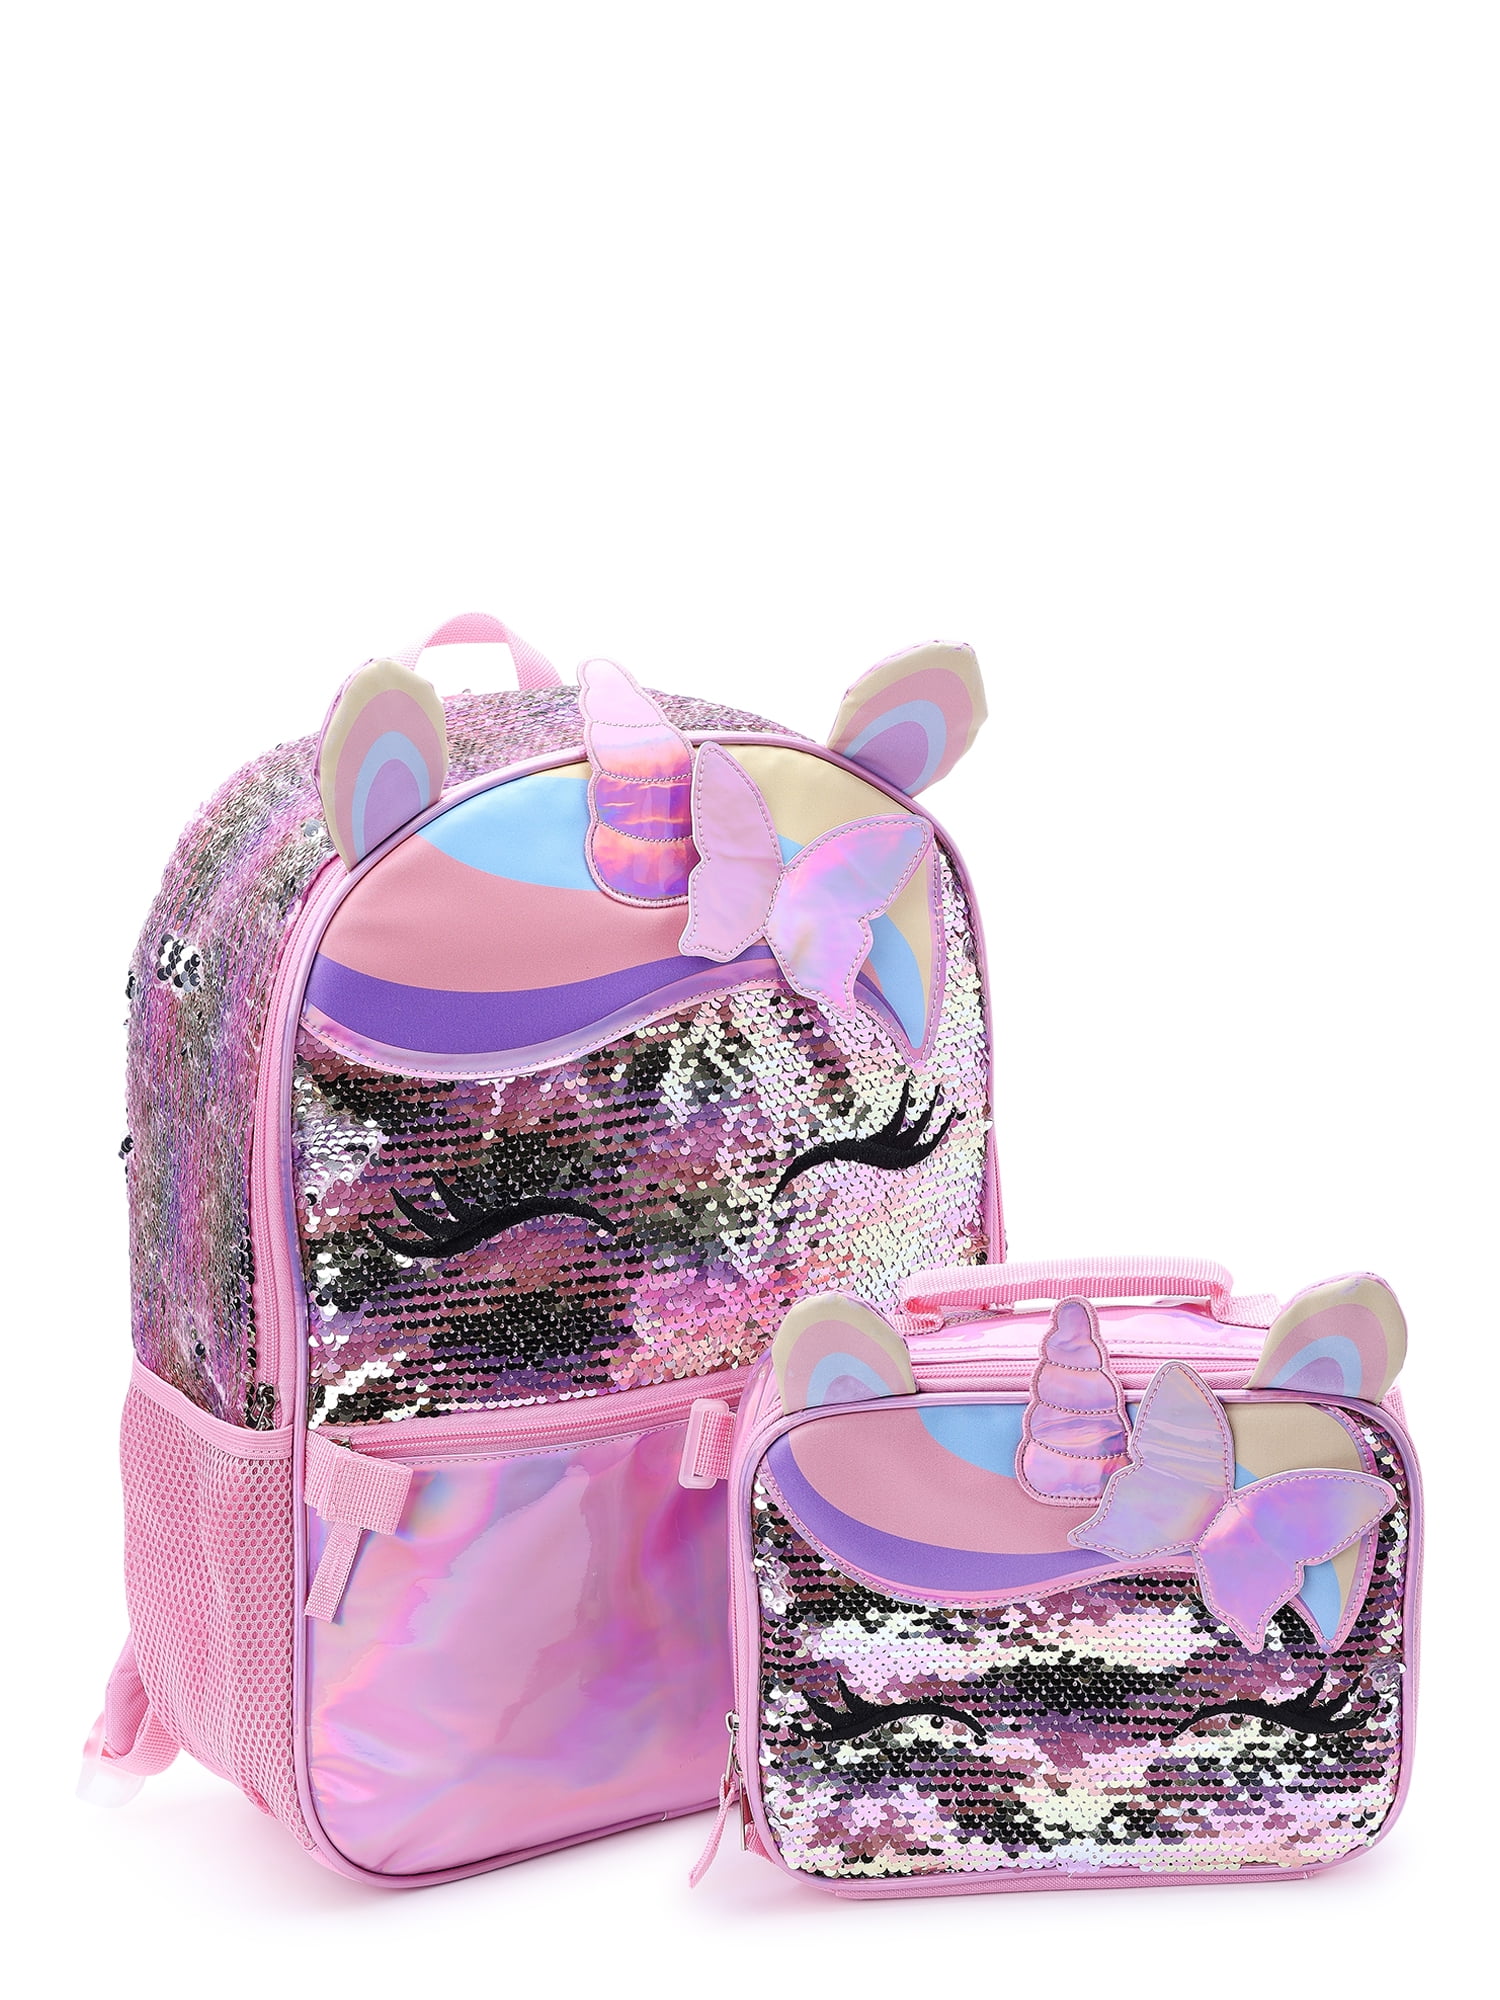 Wonder Nation Butterfly Girl Unicorn Girls 17 Laptop Backpack with Lunch Bag 2 Piece Set Pink 788149bb 688a 41b2 811a ddb706a04e5b.ceeadd465b5c5828082f7e016f4c4050